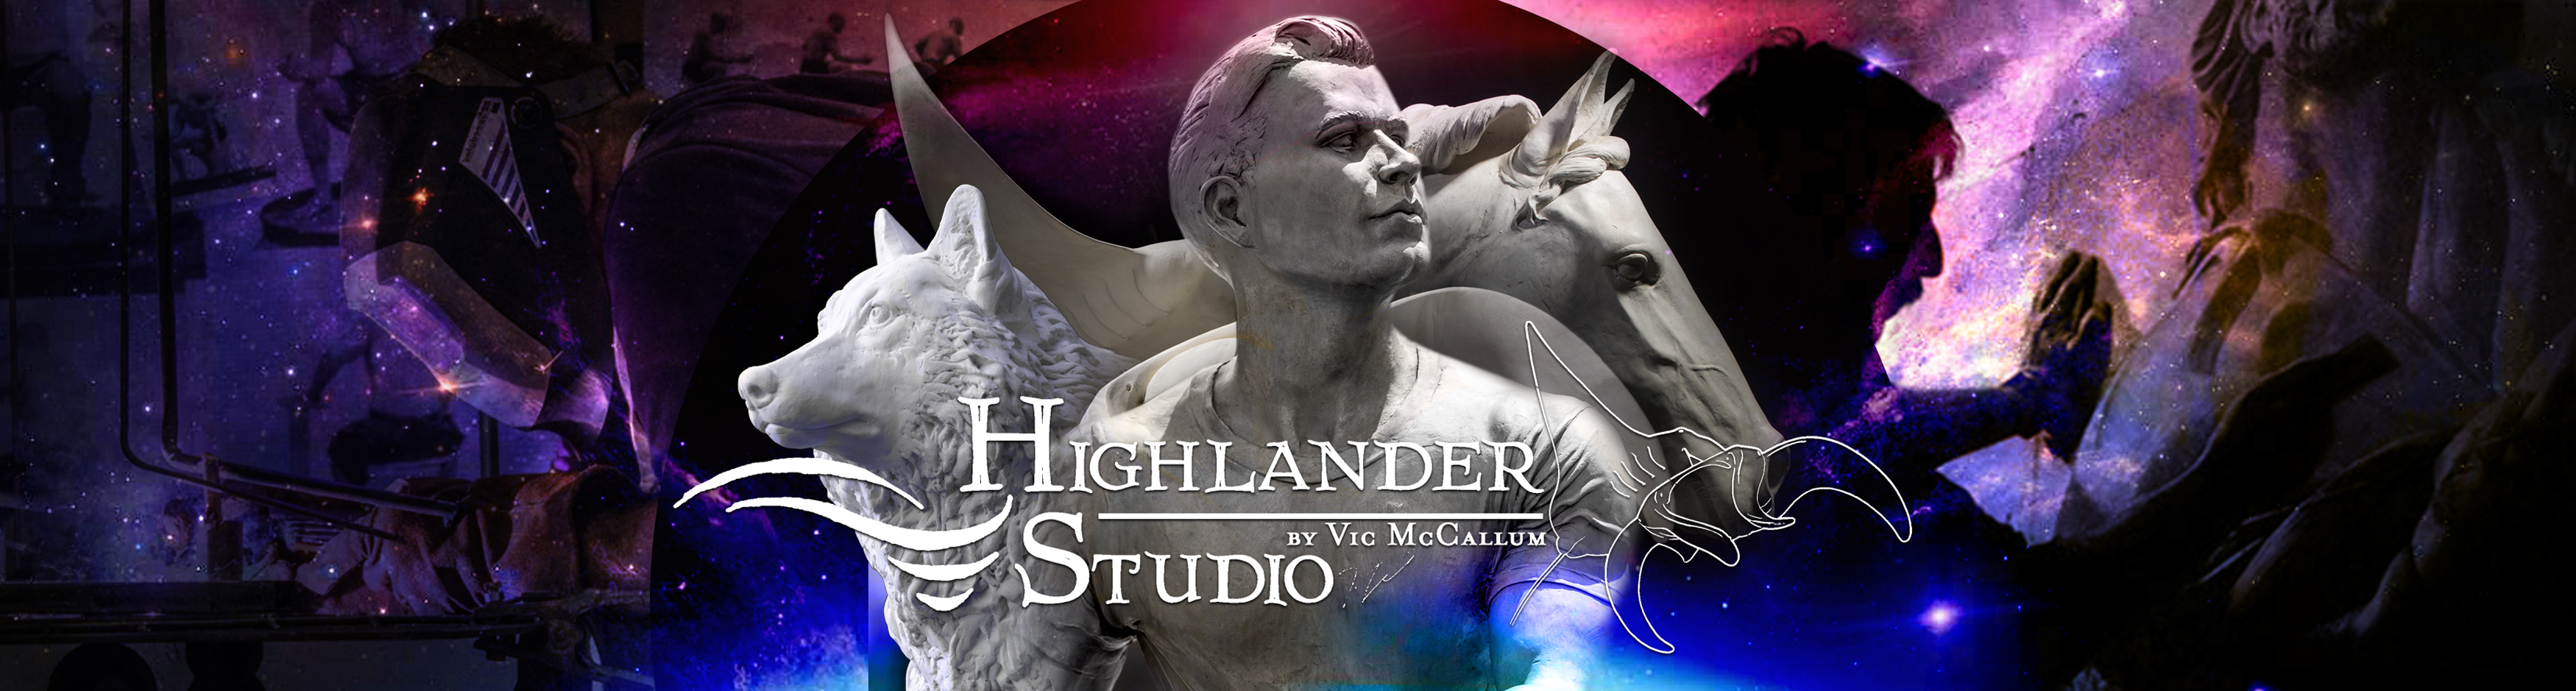 Highlander Studio